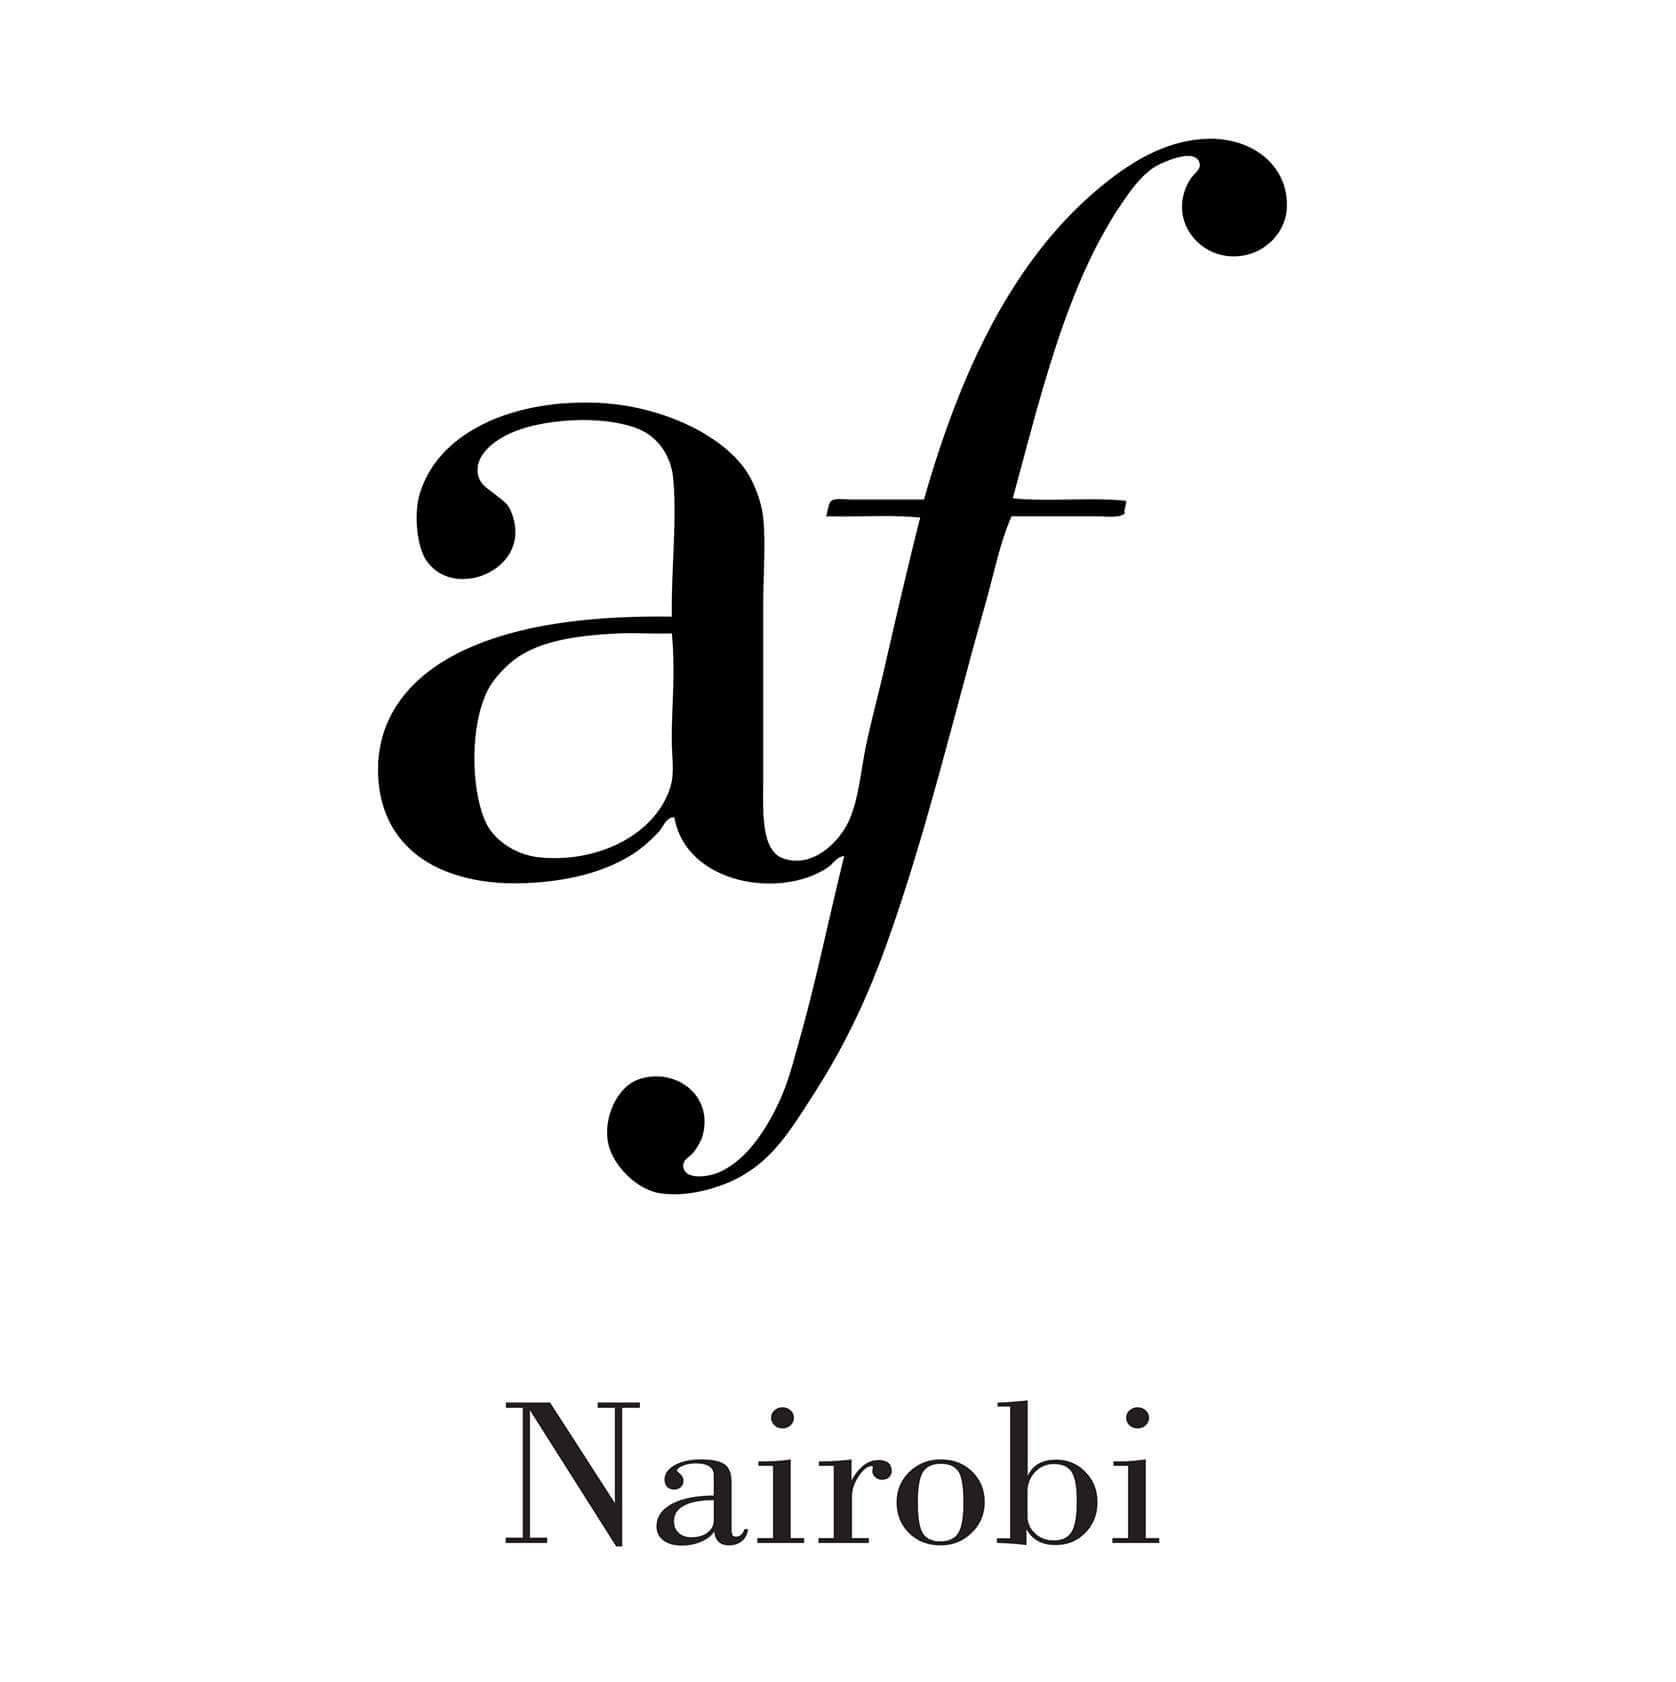 Alliance Française de Nairobi